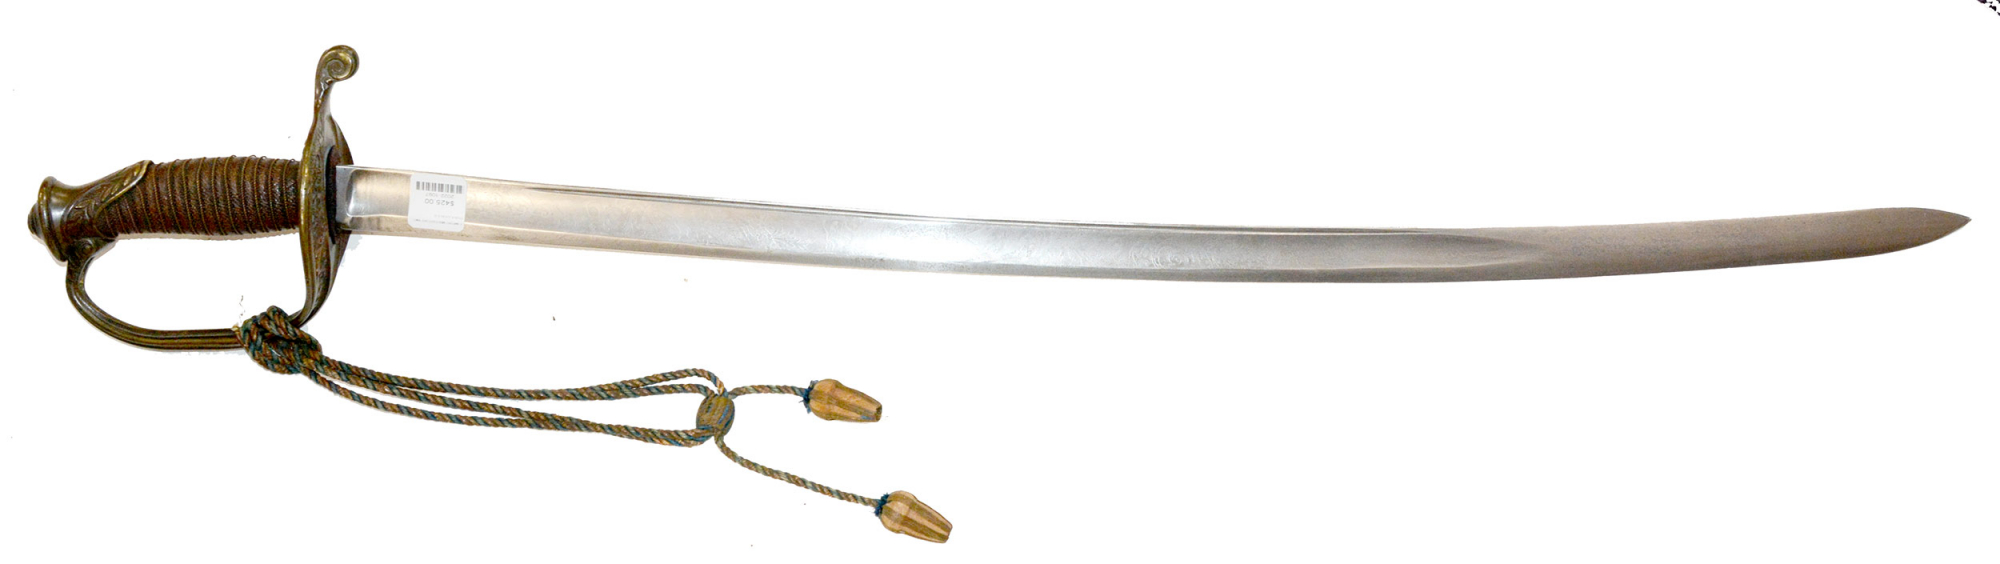 IMPORT M1850 FOOT OFFICER’S SWORD WITH HAT CORD – LAMBERT & MAST, PHILA